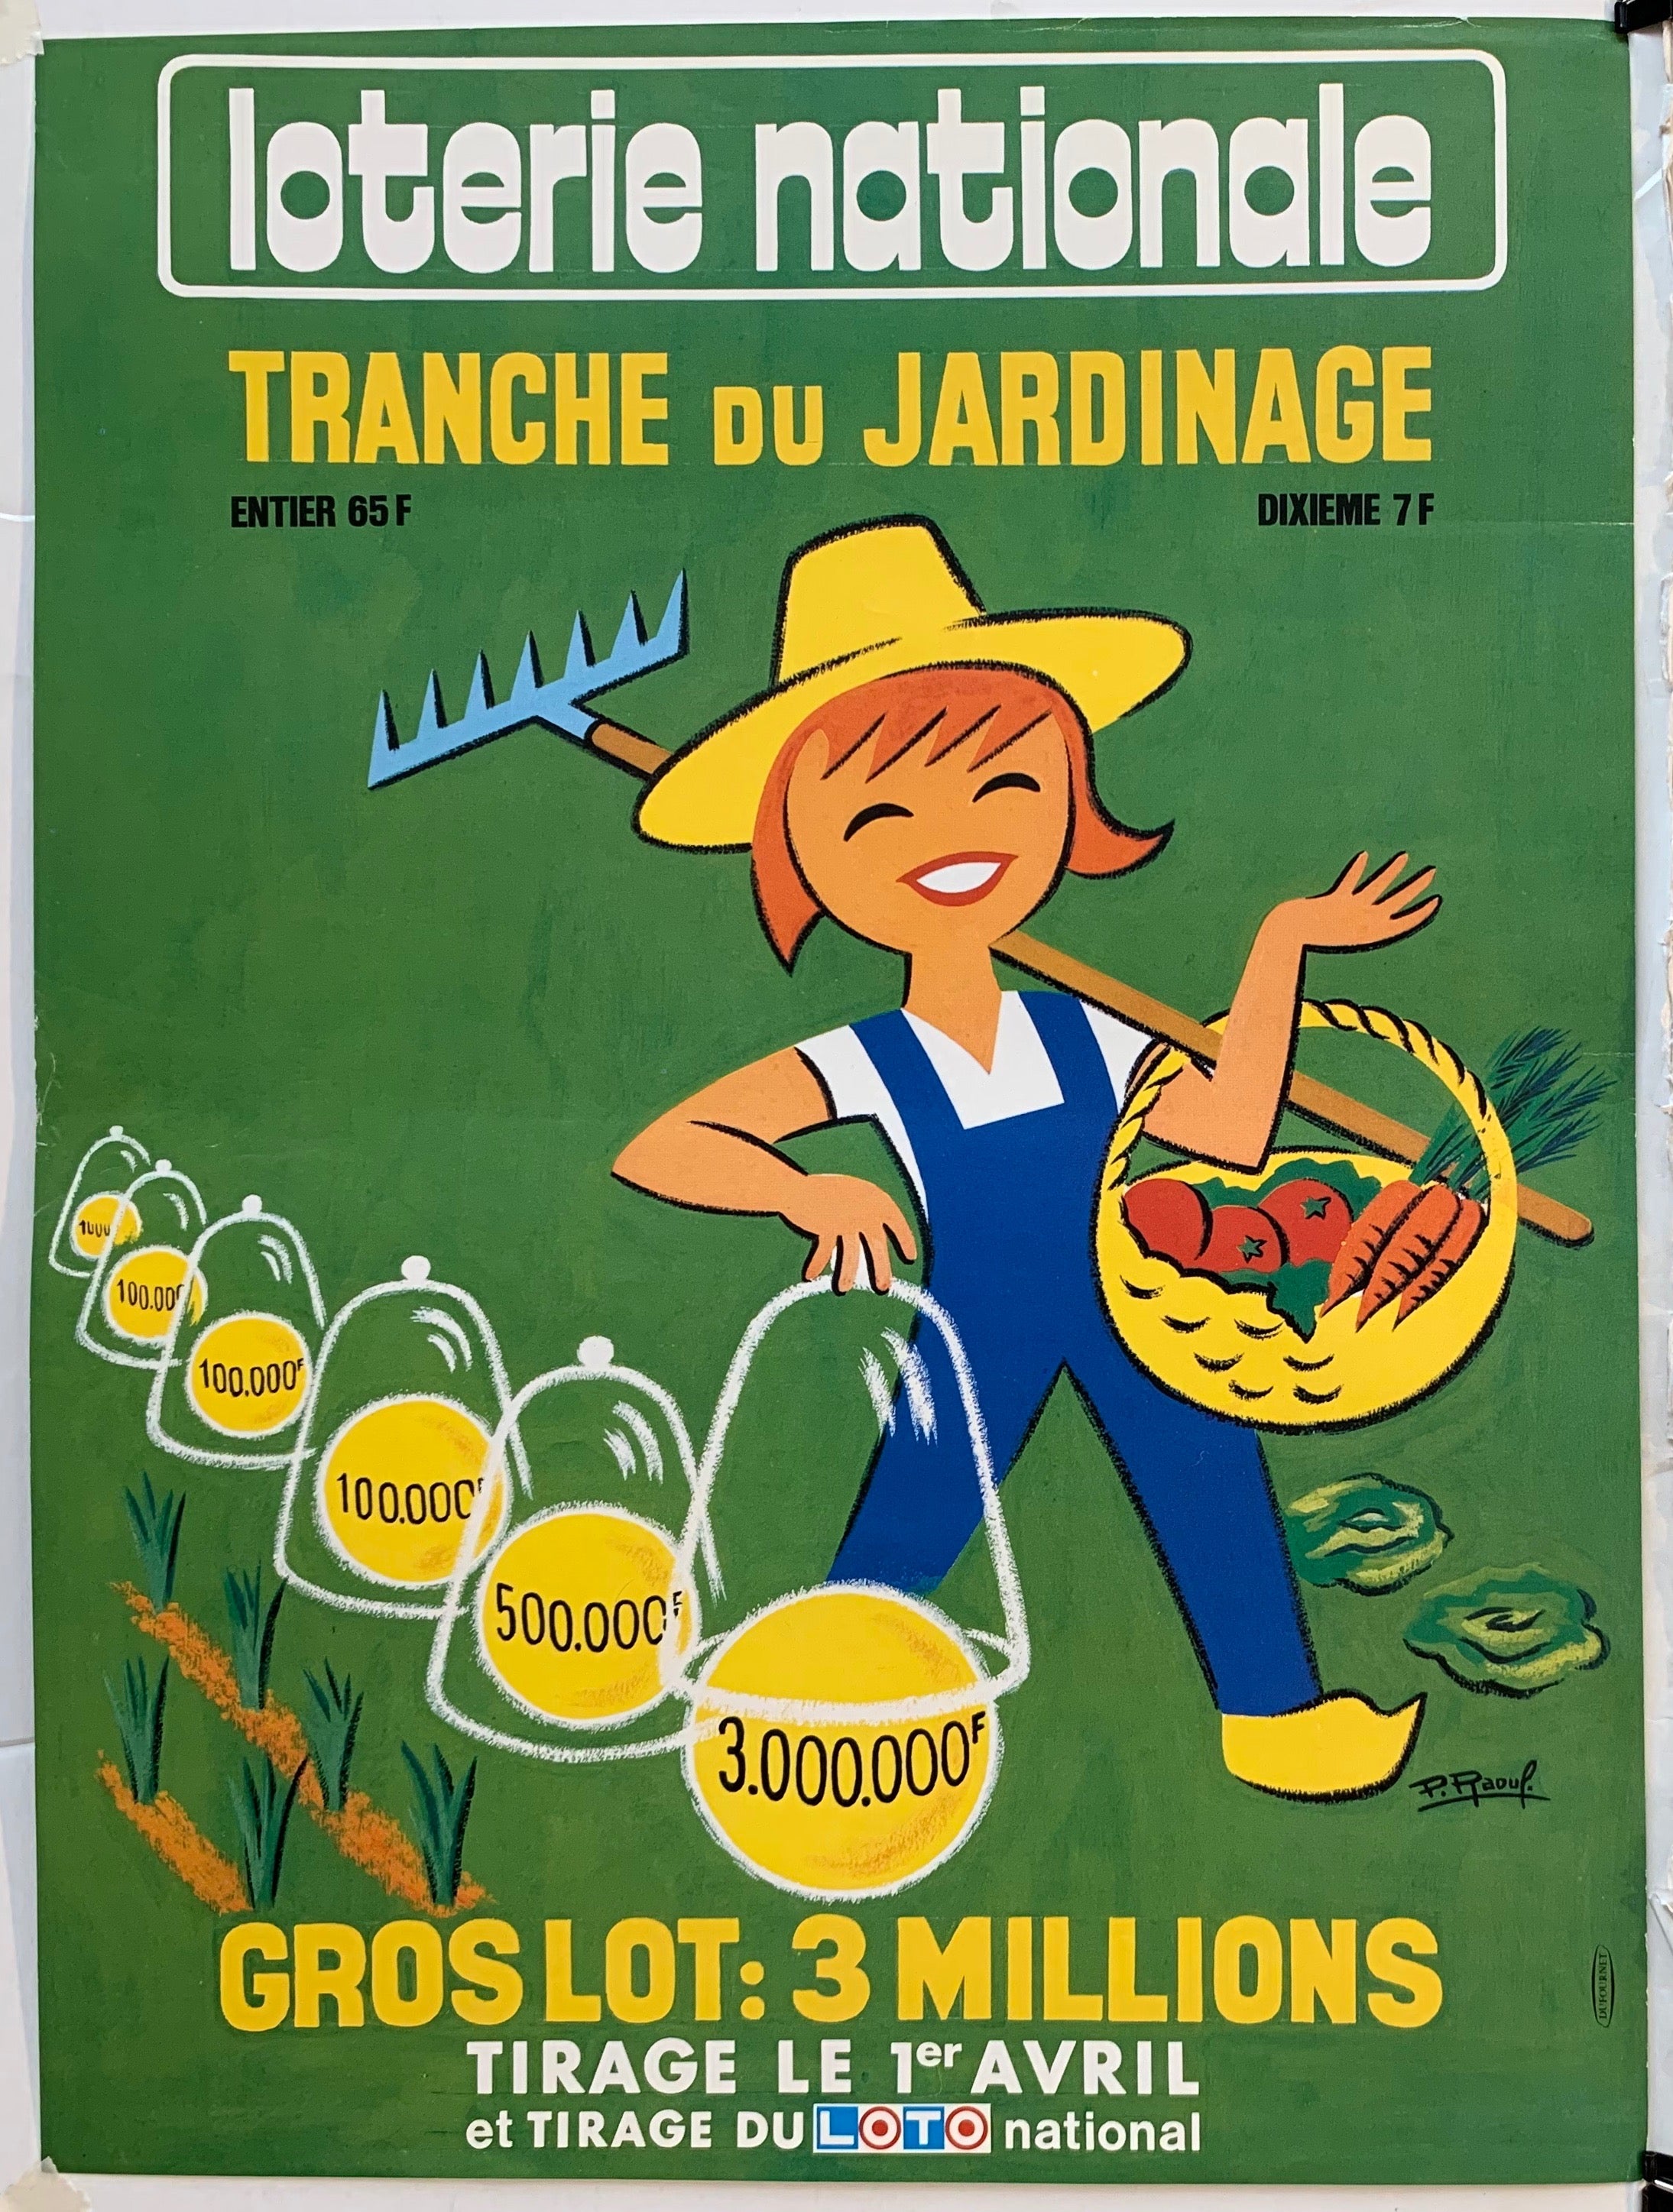 Loterie Nationale - "Tranche du Jardinage"